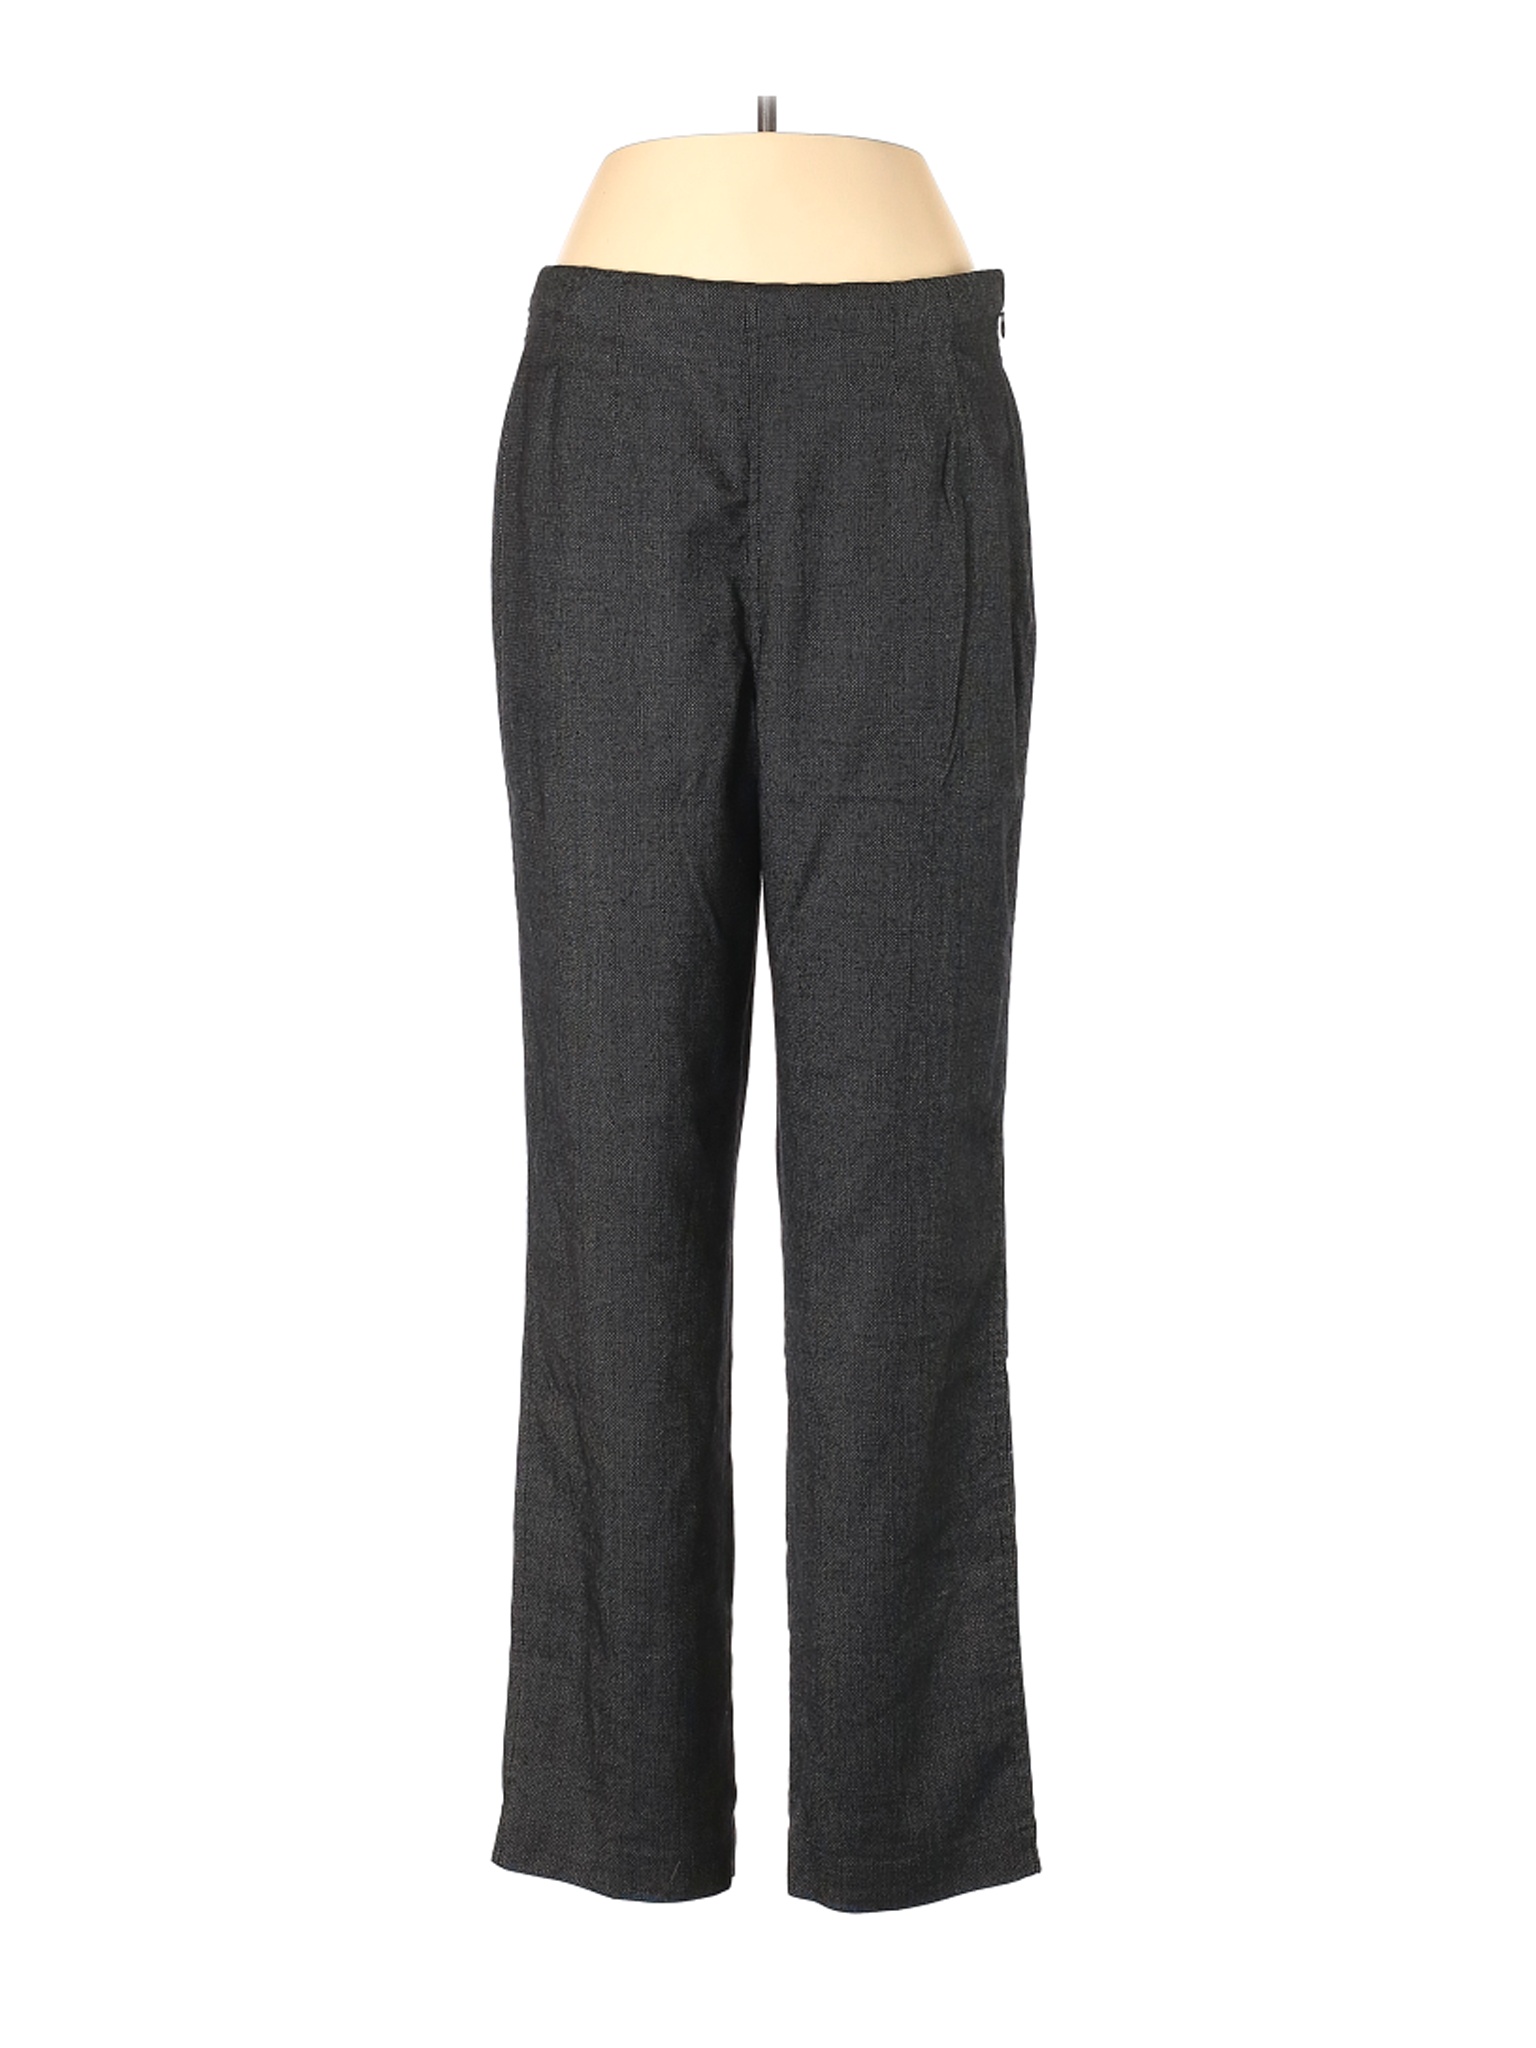 Sigrid Olsen Women Black Dress Pants 12 | eBay